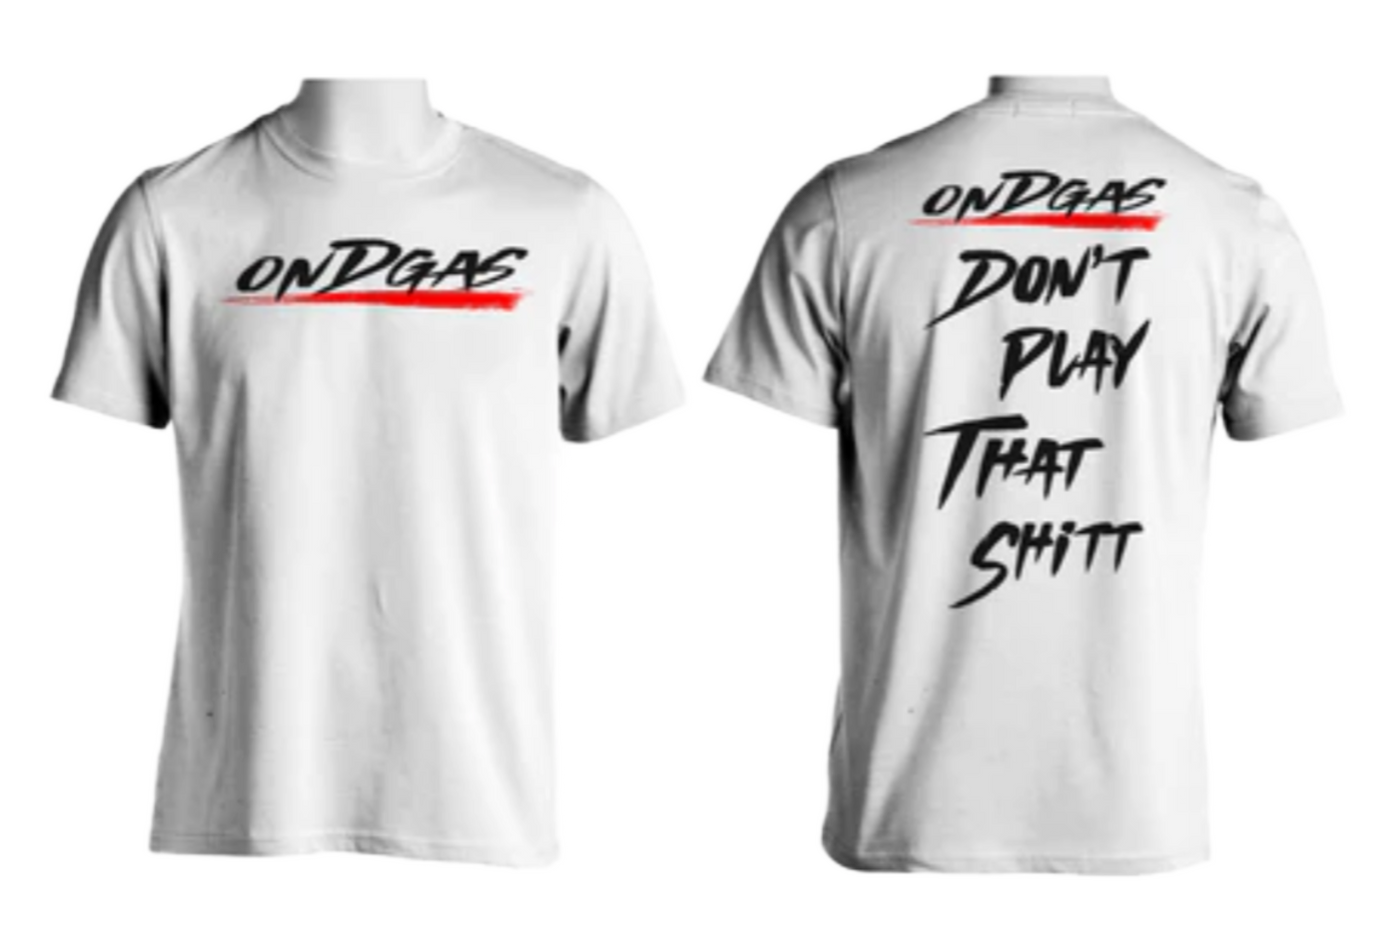 ONDGAS Don't play that Shiit! (WHITE Shirt)